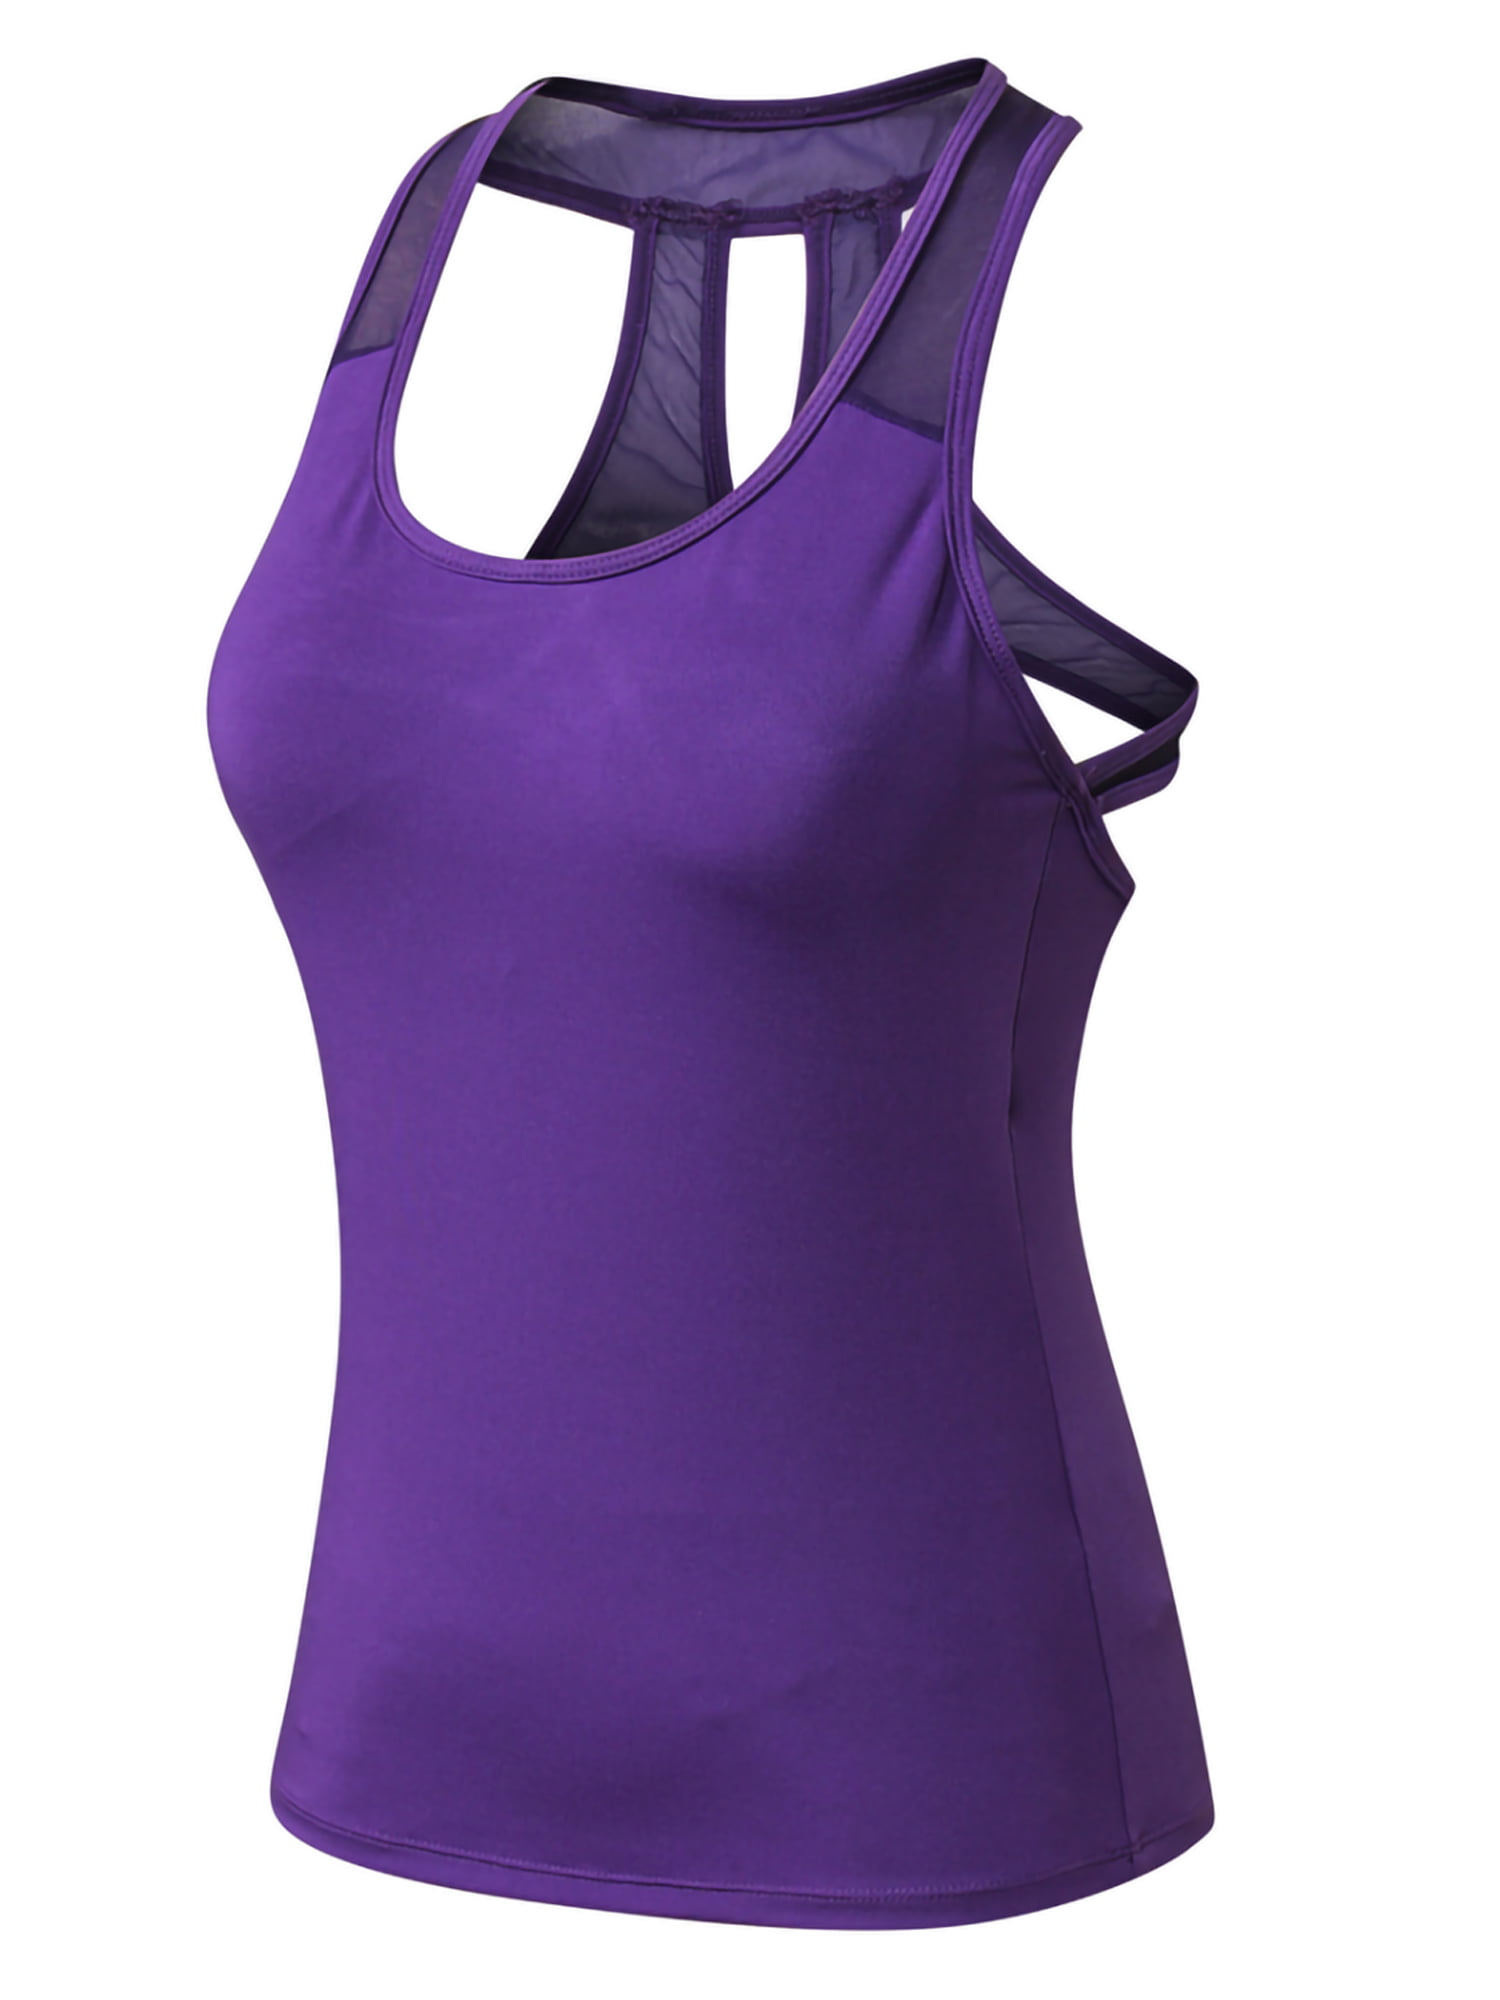 ALONG FIT Open Back Dance Tank Tops for Women Summer Backless Workout Tank Top Loose Fit Tie Dye Crop Top Yoga Shirt